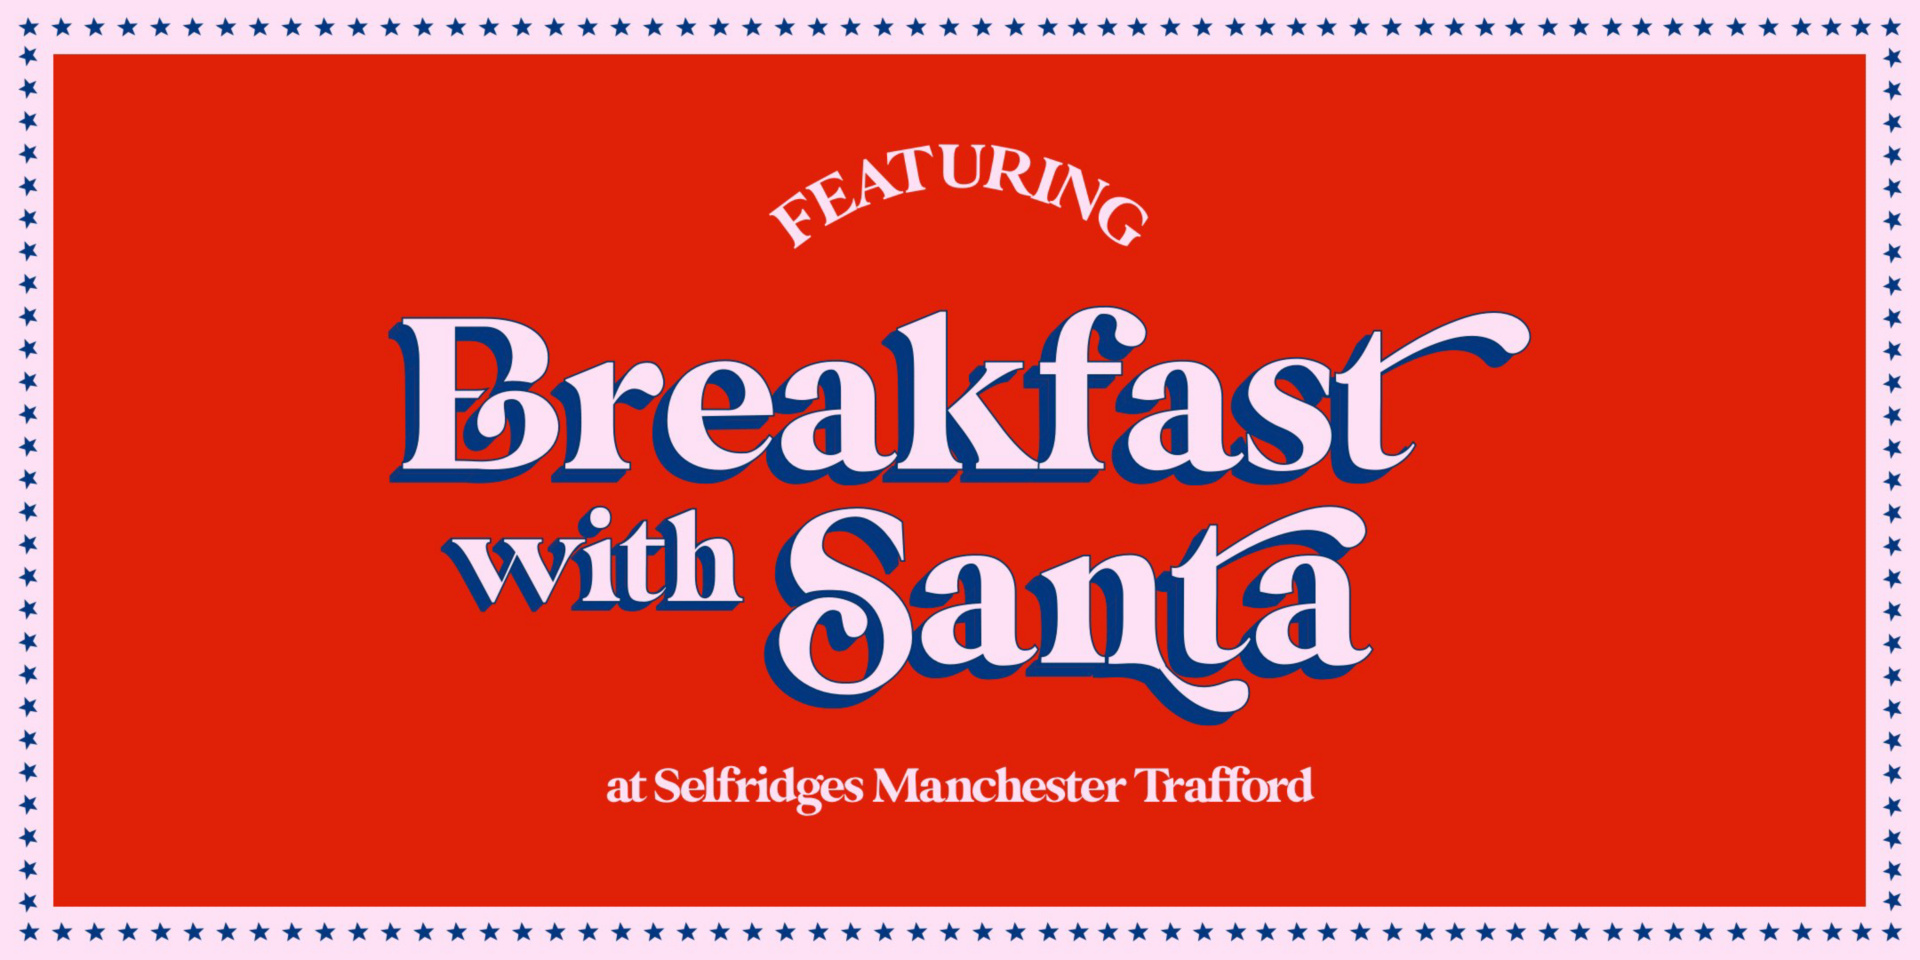 Breakfast with Santa at Selfridges Manchester Trafford 